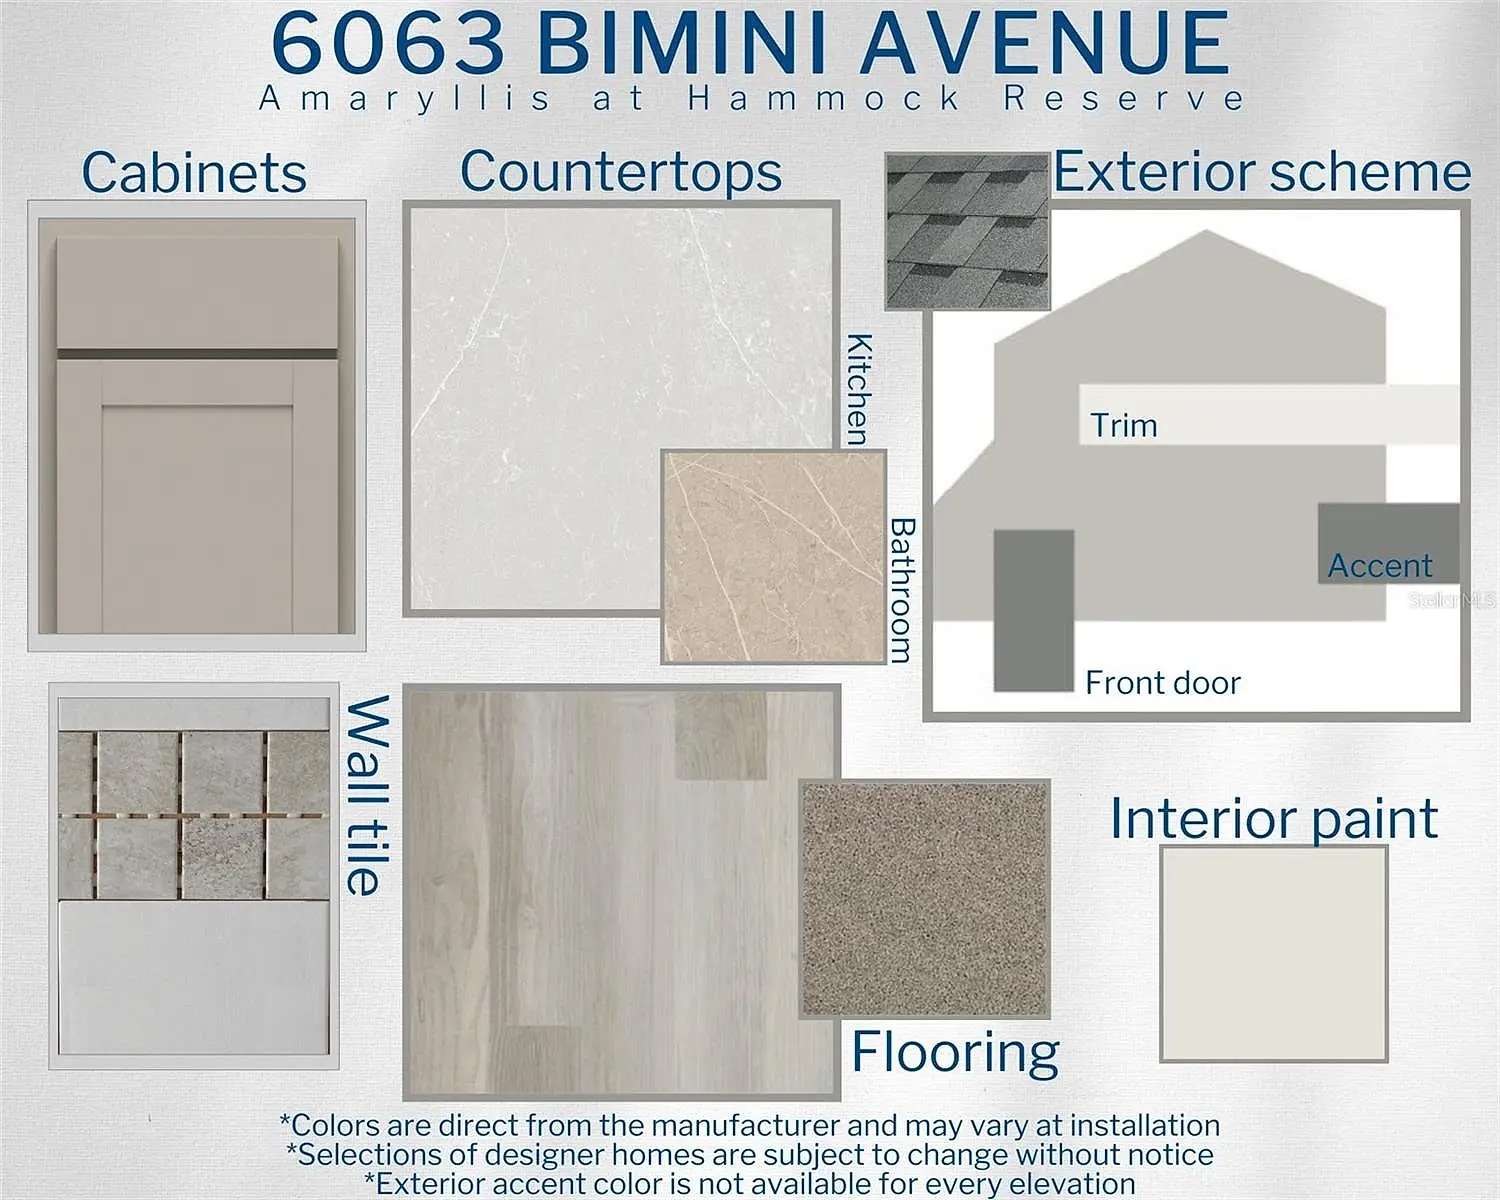 6063 Bimini Avenue